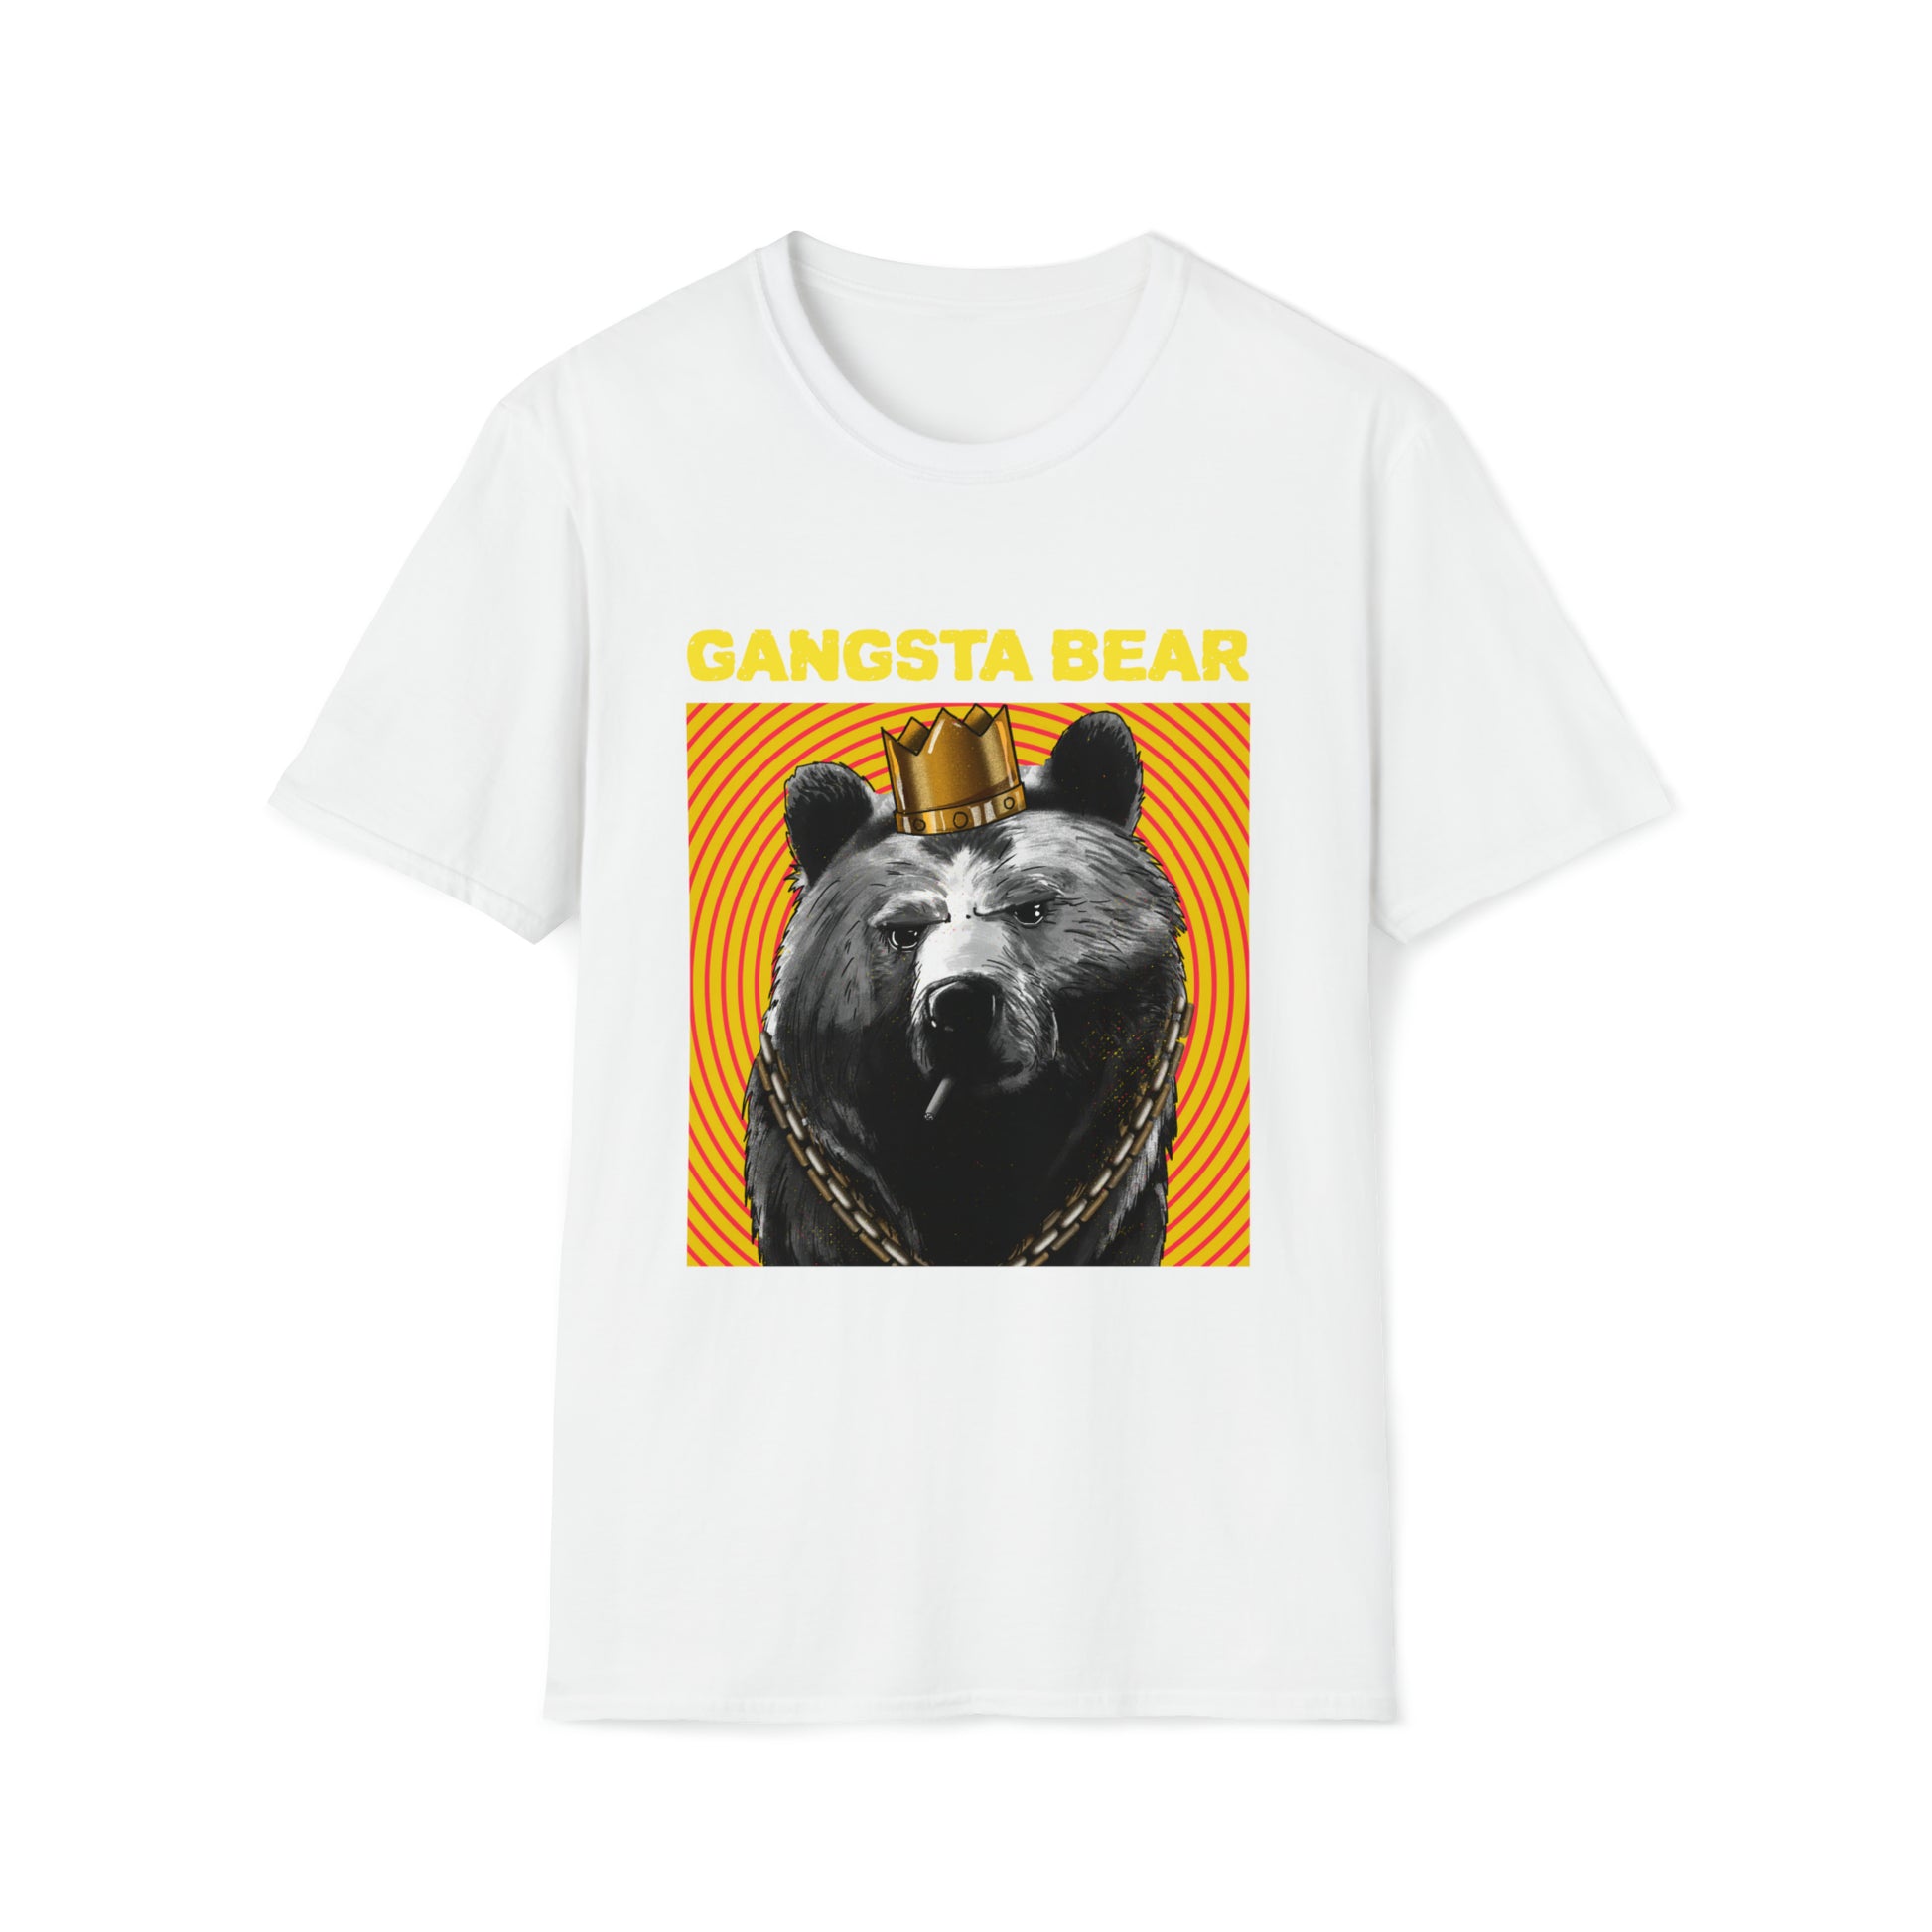 Gangsta Bear - Urban Camper